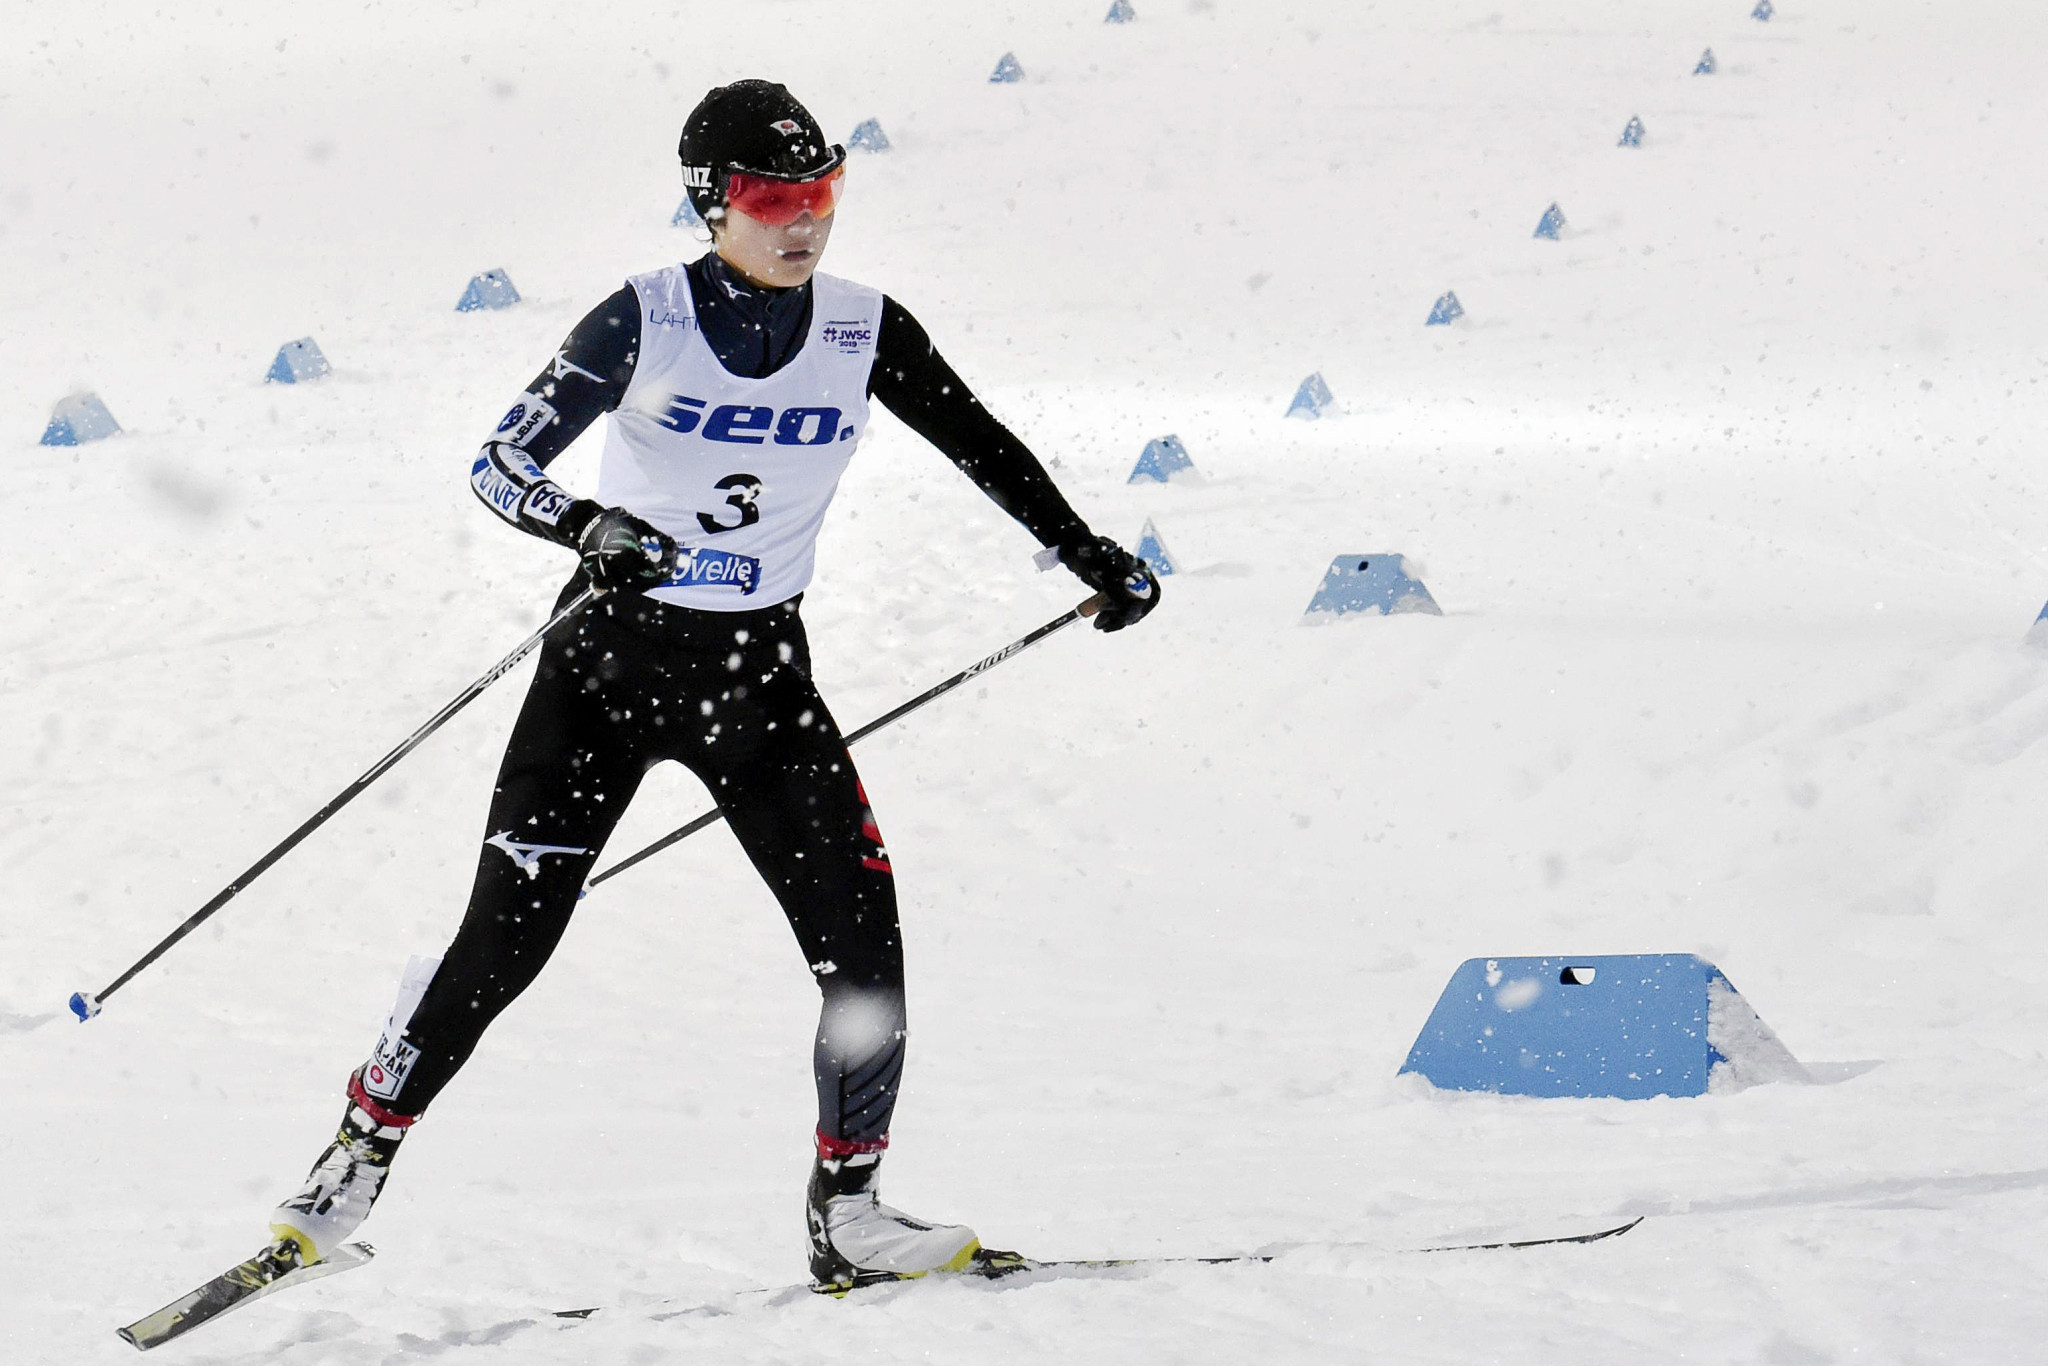 Nordic Junior World Ski Championships to get underway in Vuokatti